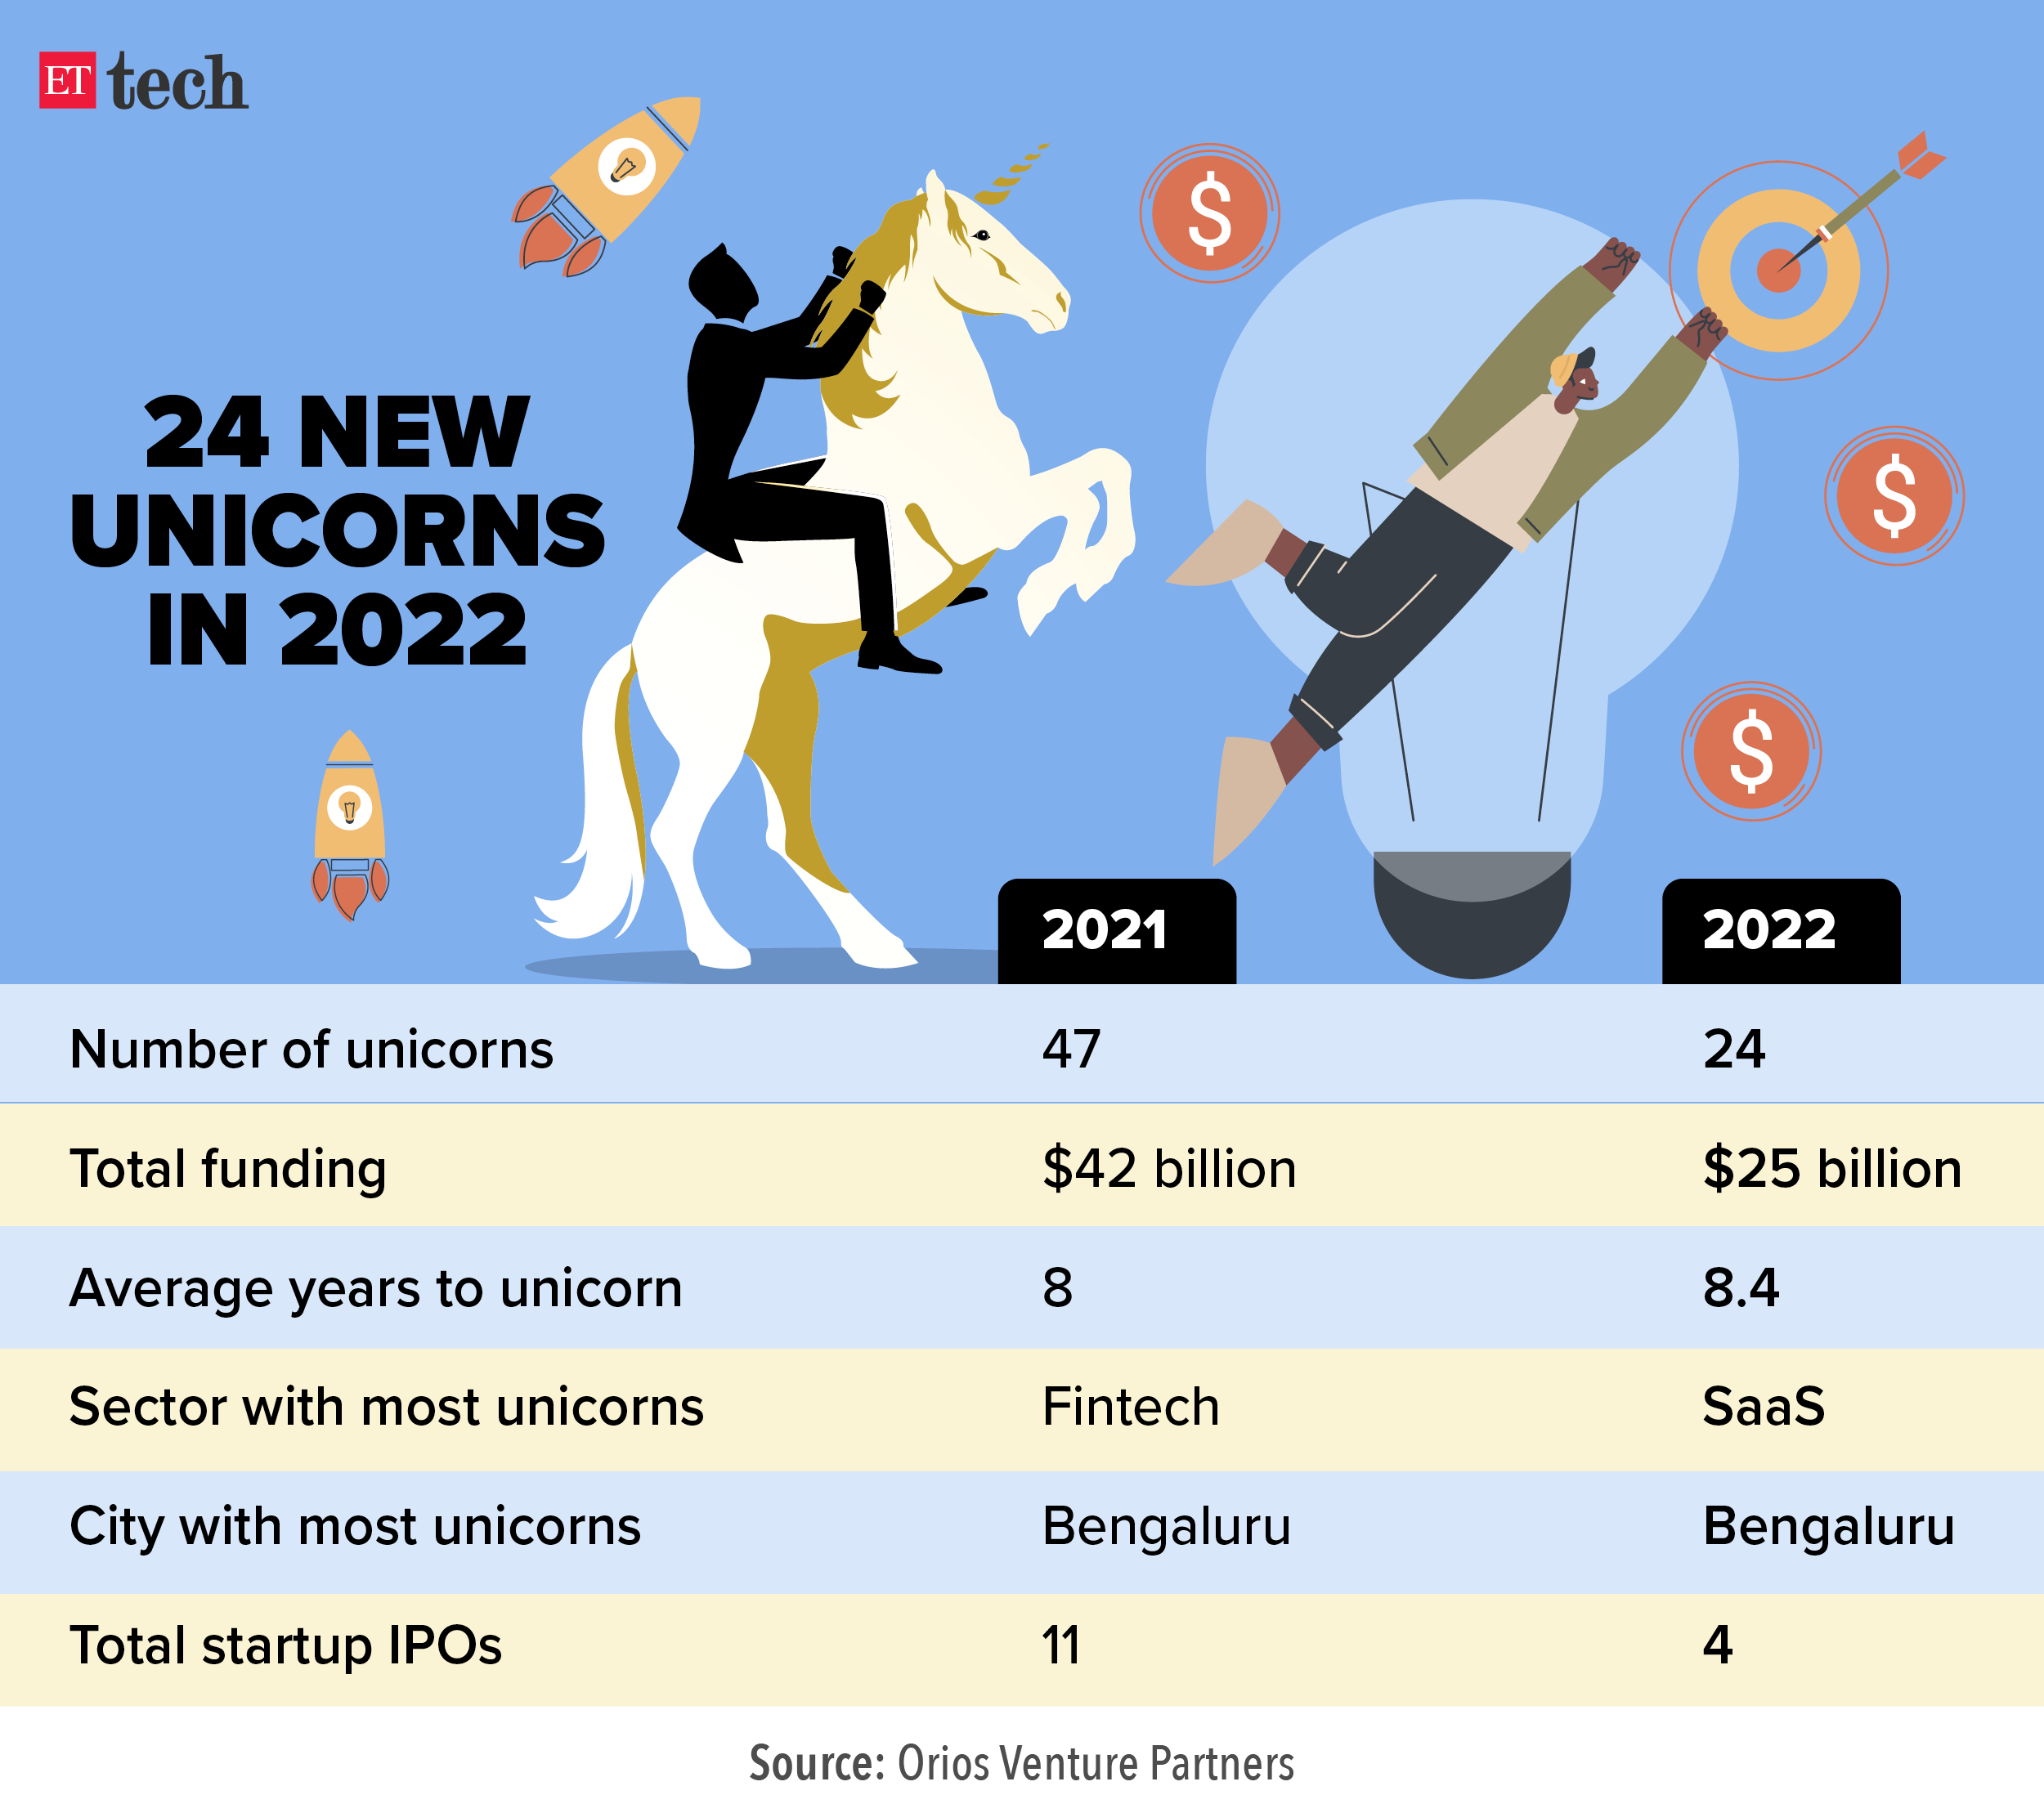 24 new unicorn companies in 2022